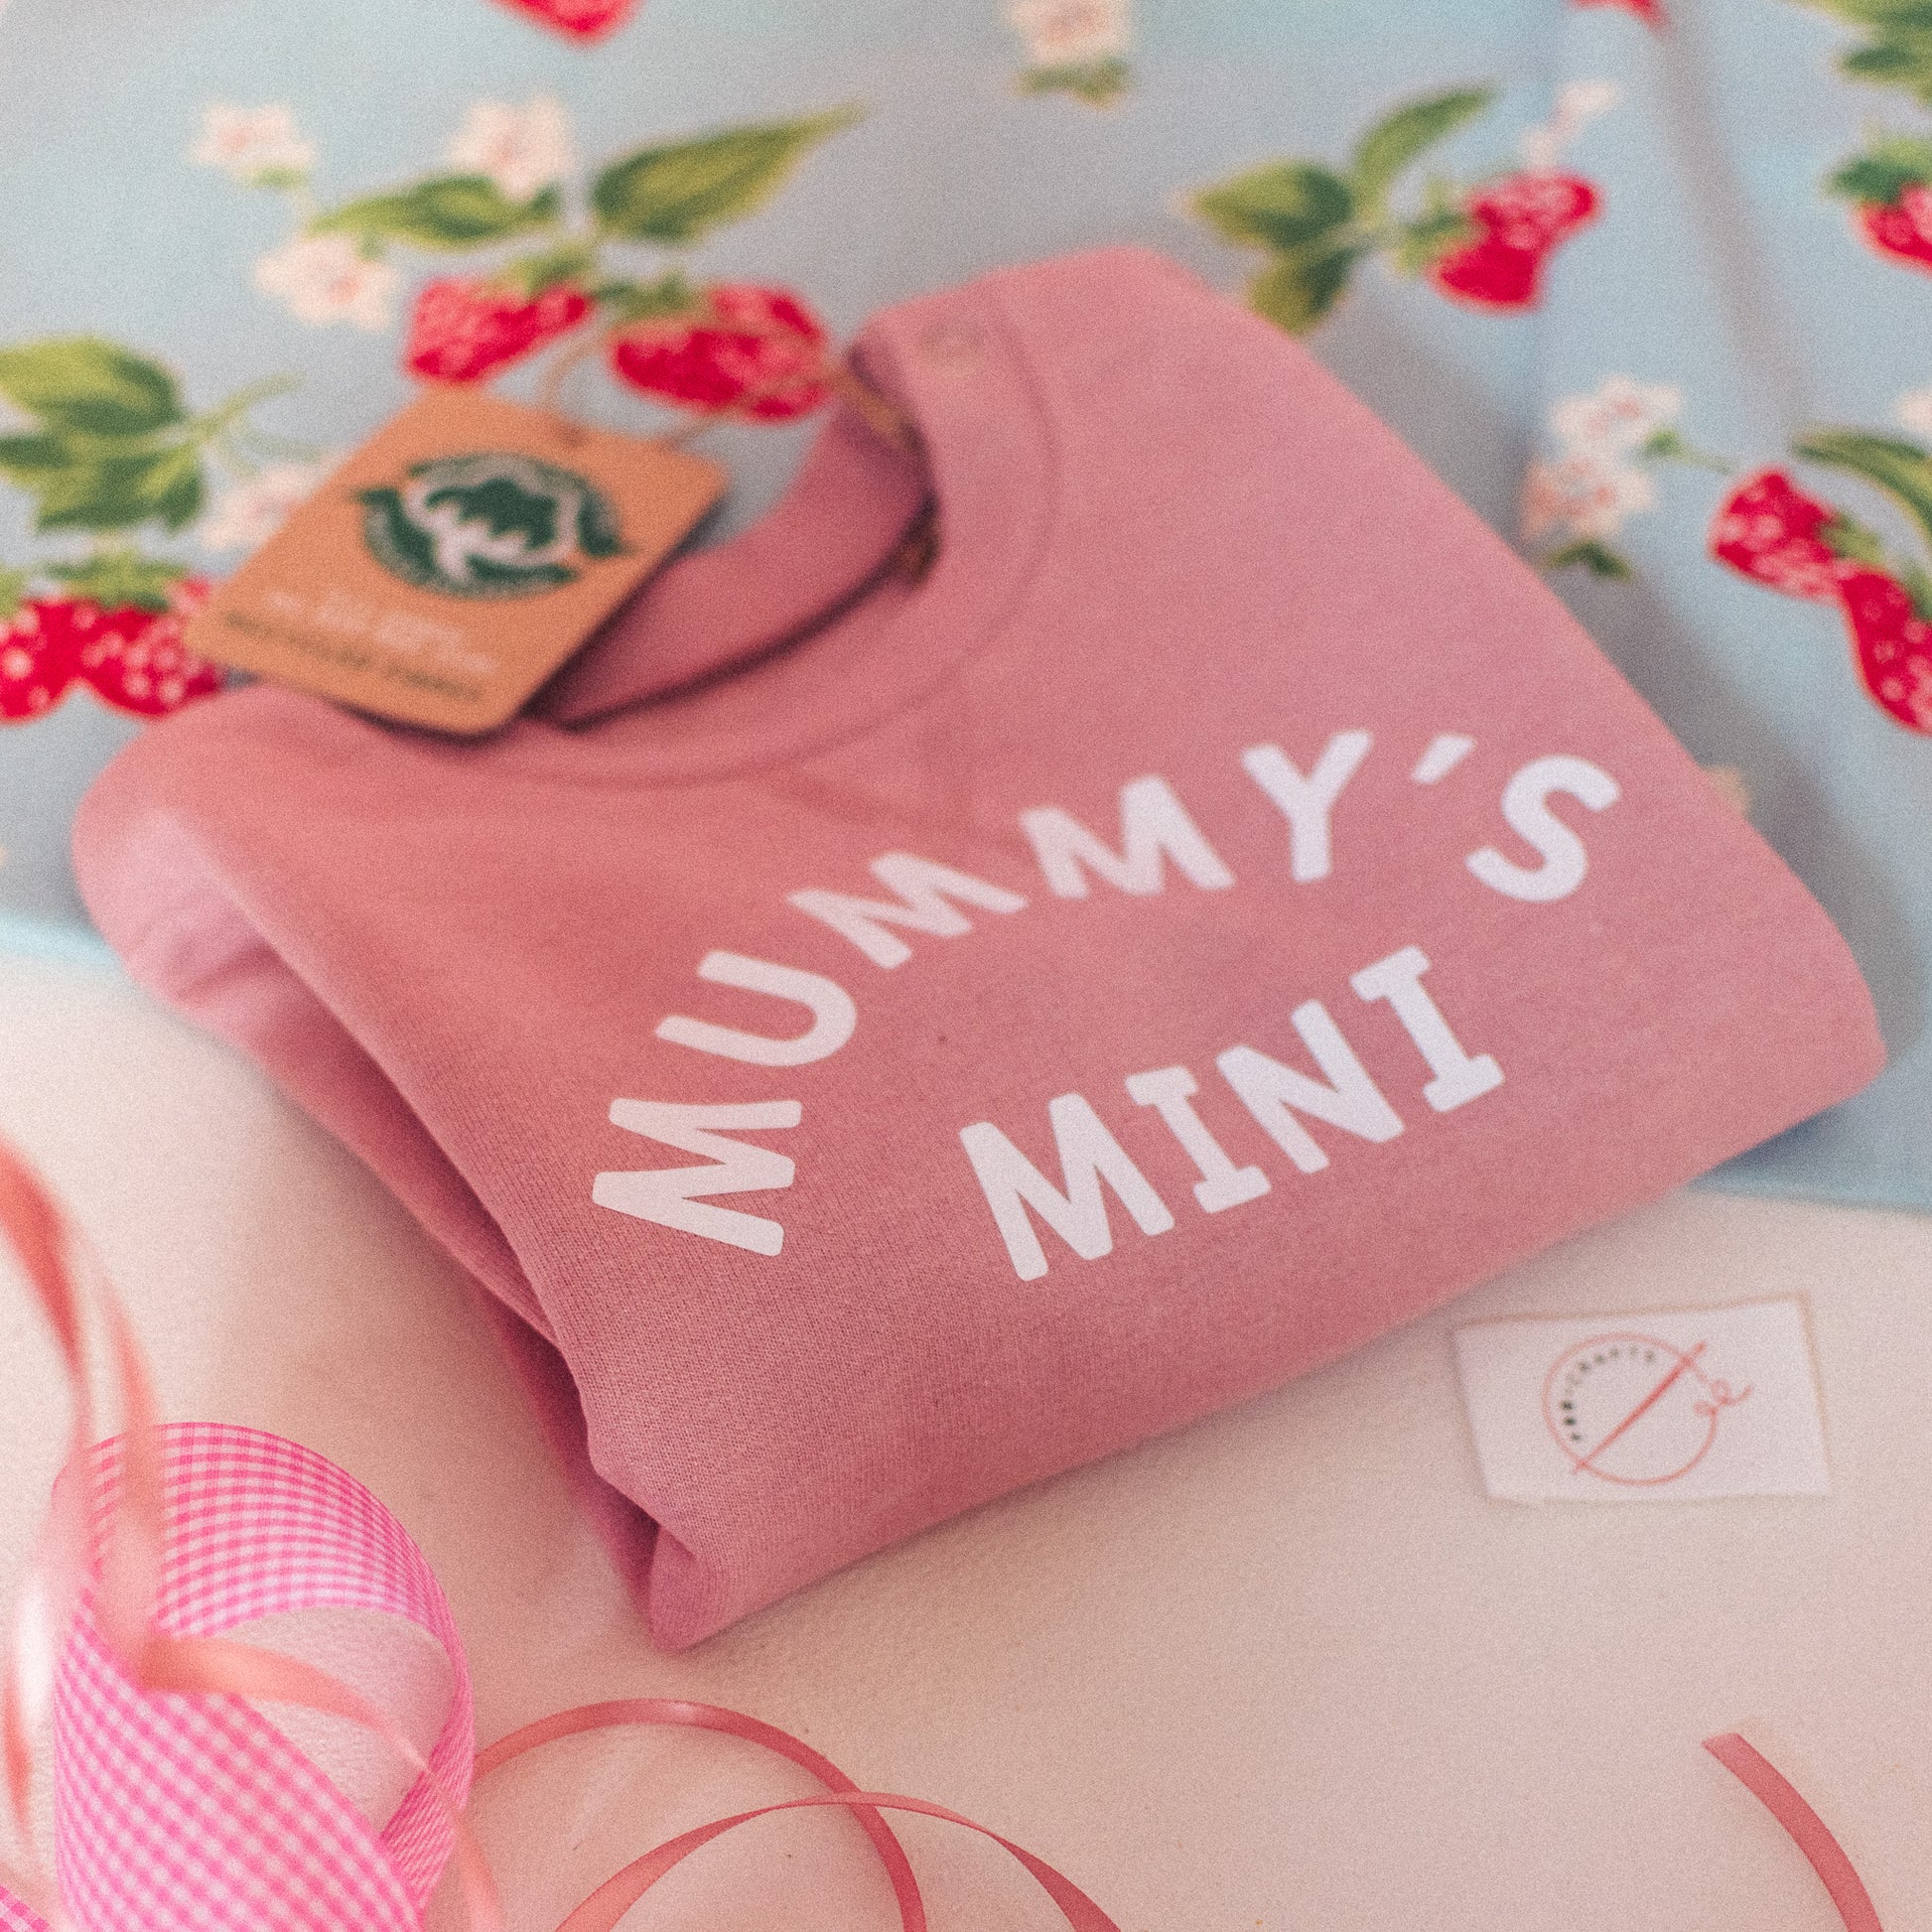 Mummy's Mini" Children's Sweatshirt: "Adorable pink children's sweatshirt with 'Mummy's Mini' design.